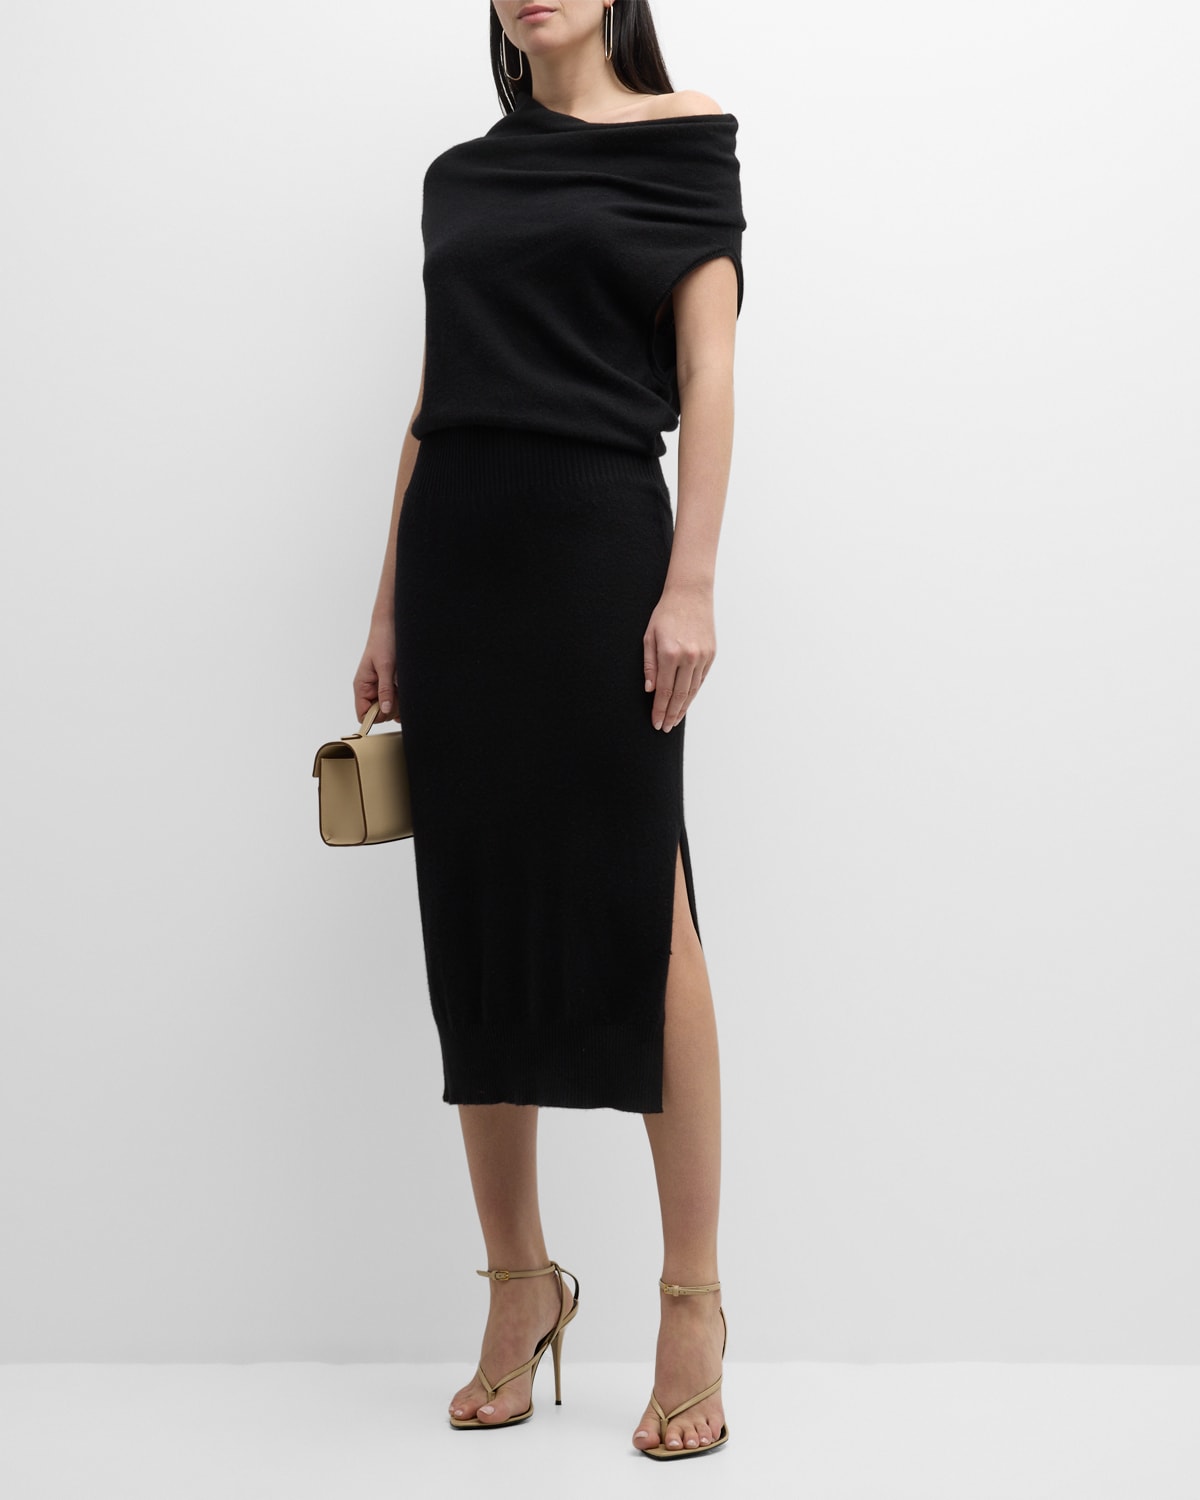 Lori One-Shoulder Side-Slit Knit Midi Dress